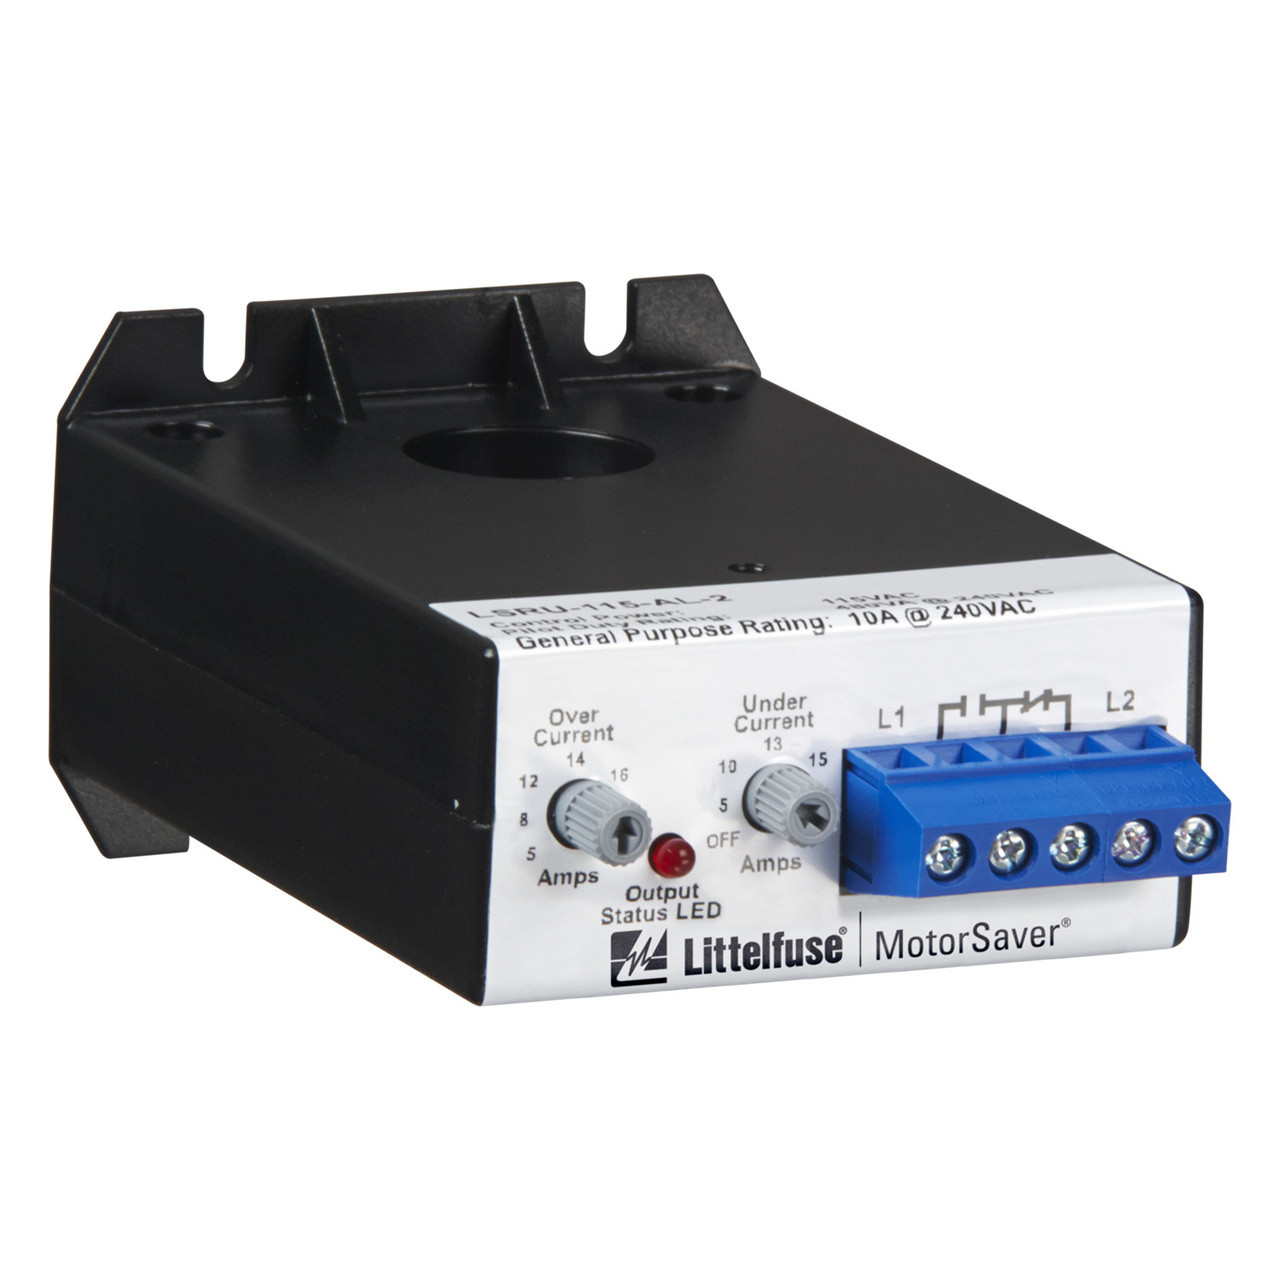 Littelfuse-Symcom LSRU-115-OU-1.5 Current Monitor Relays